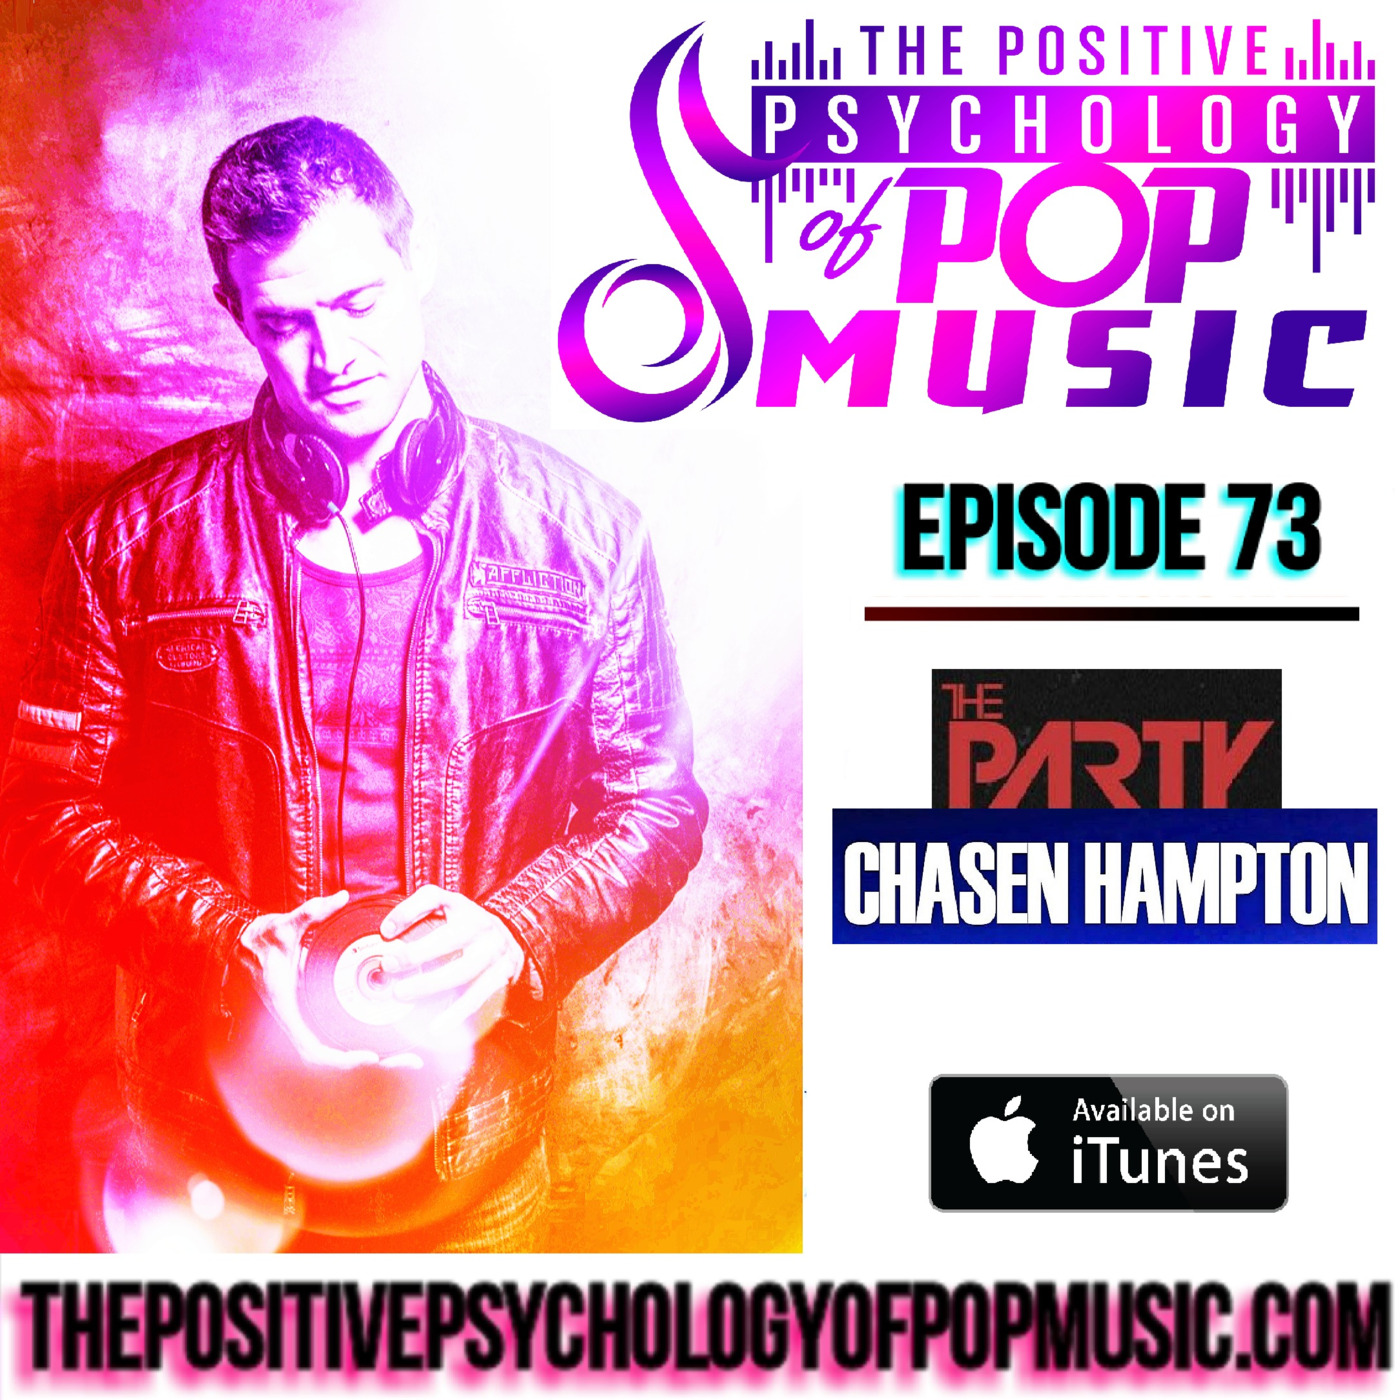 Chasen Hampton on The Positive Psychology of Pop Music!